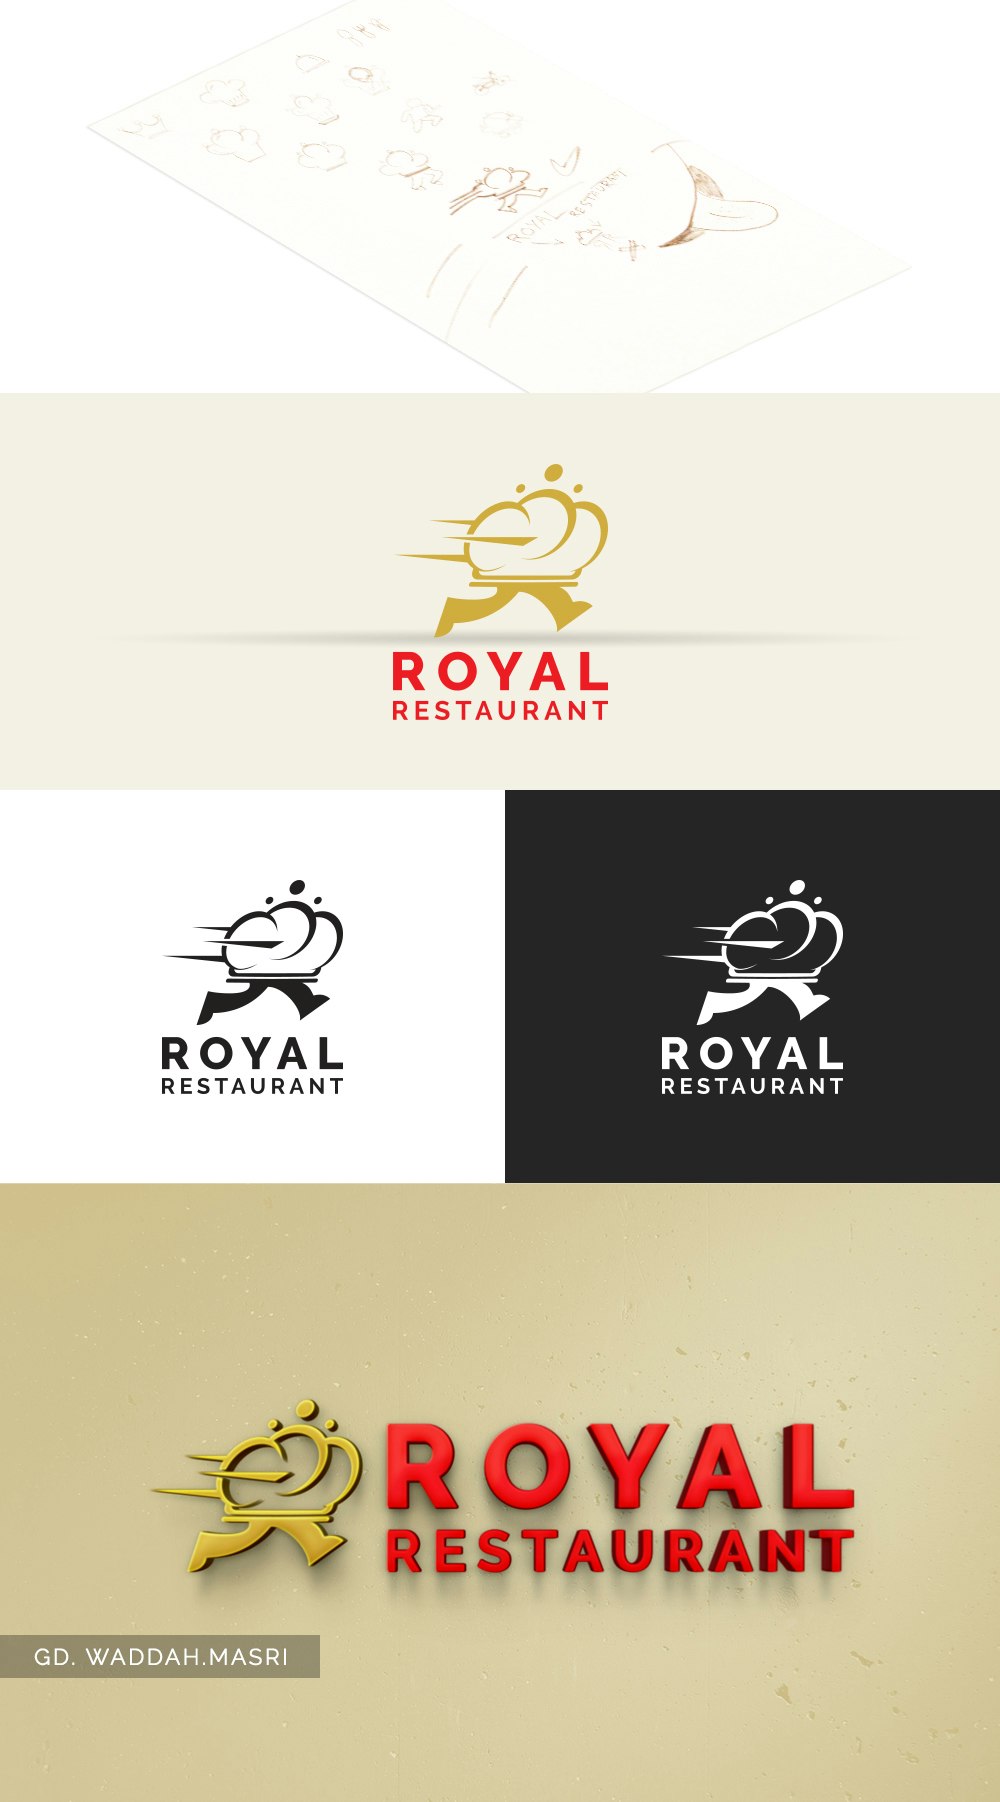 Royal restaurant